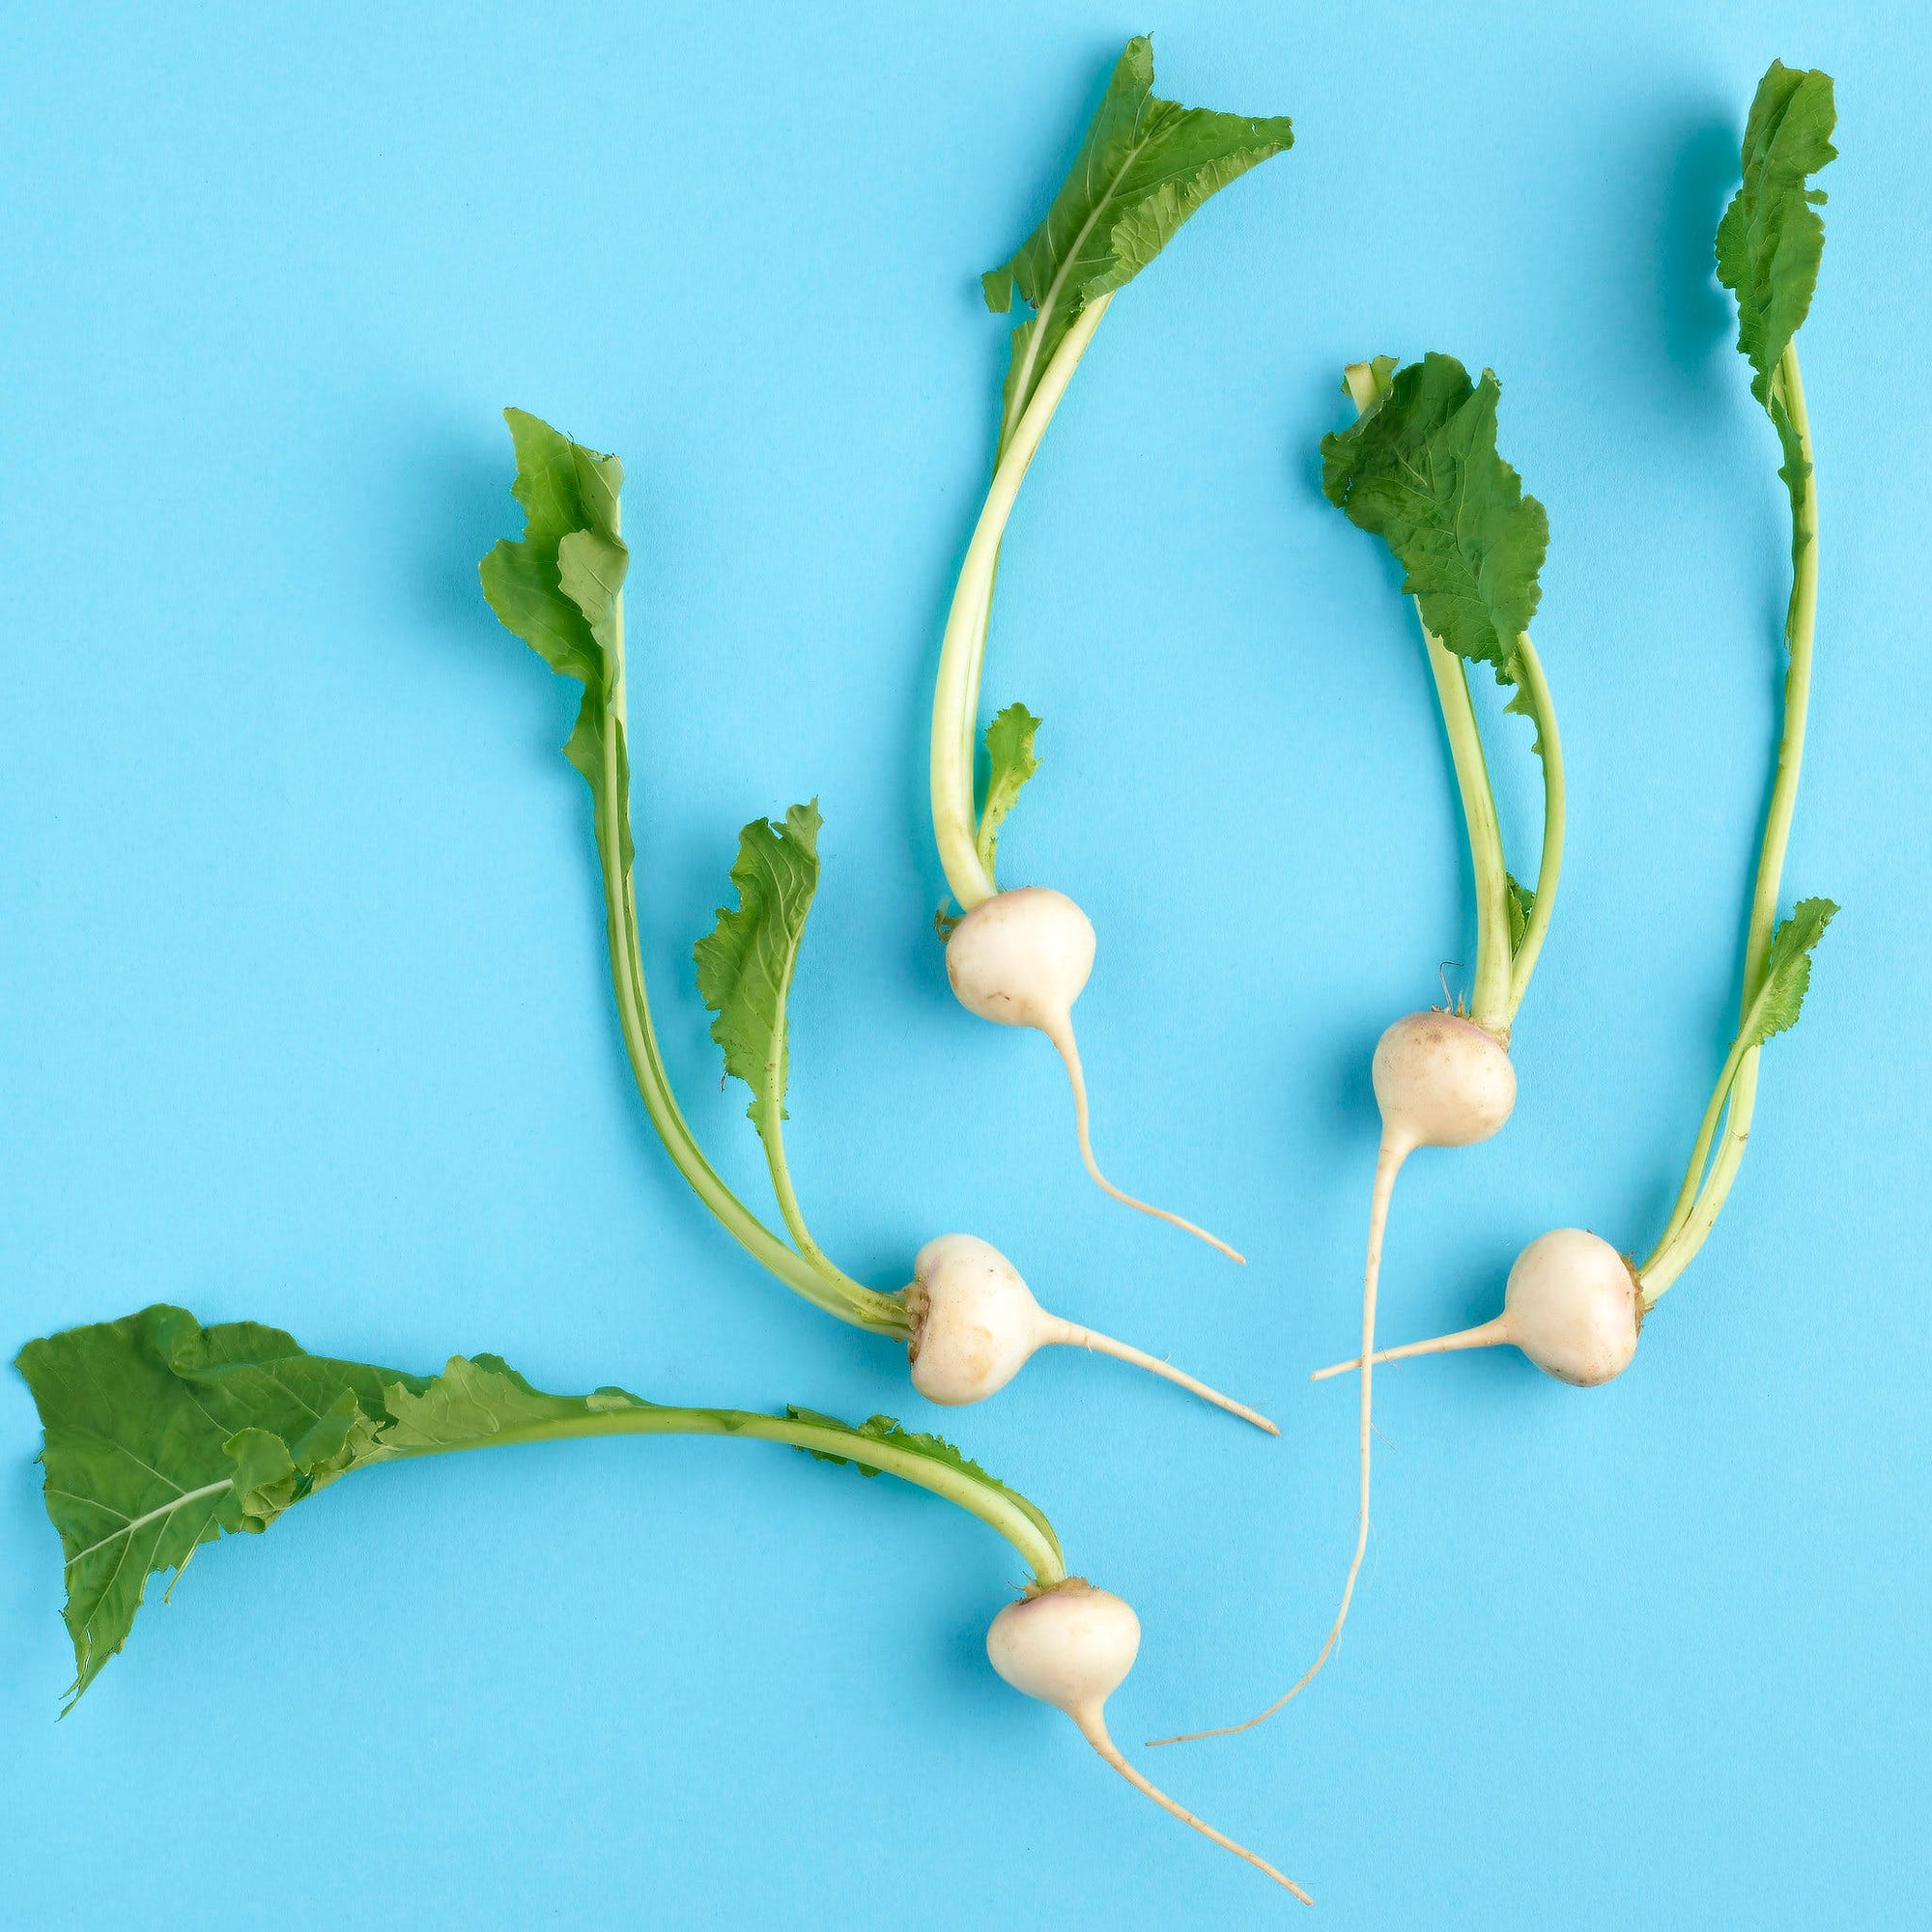 White Turnips - it's not a radish!